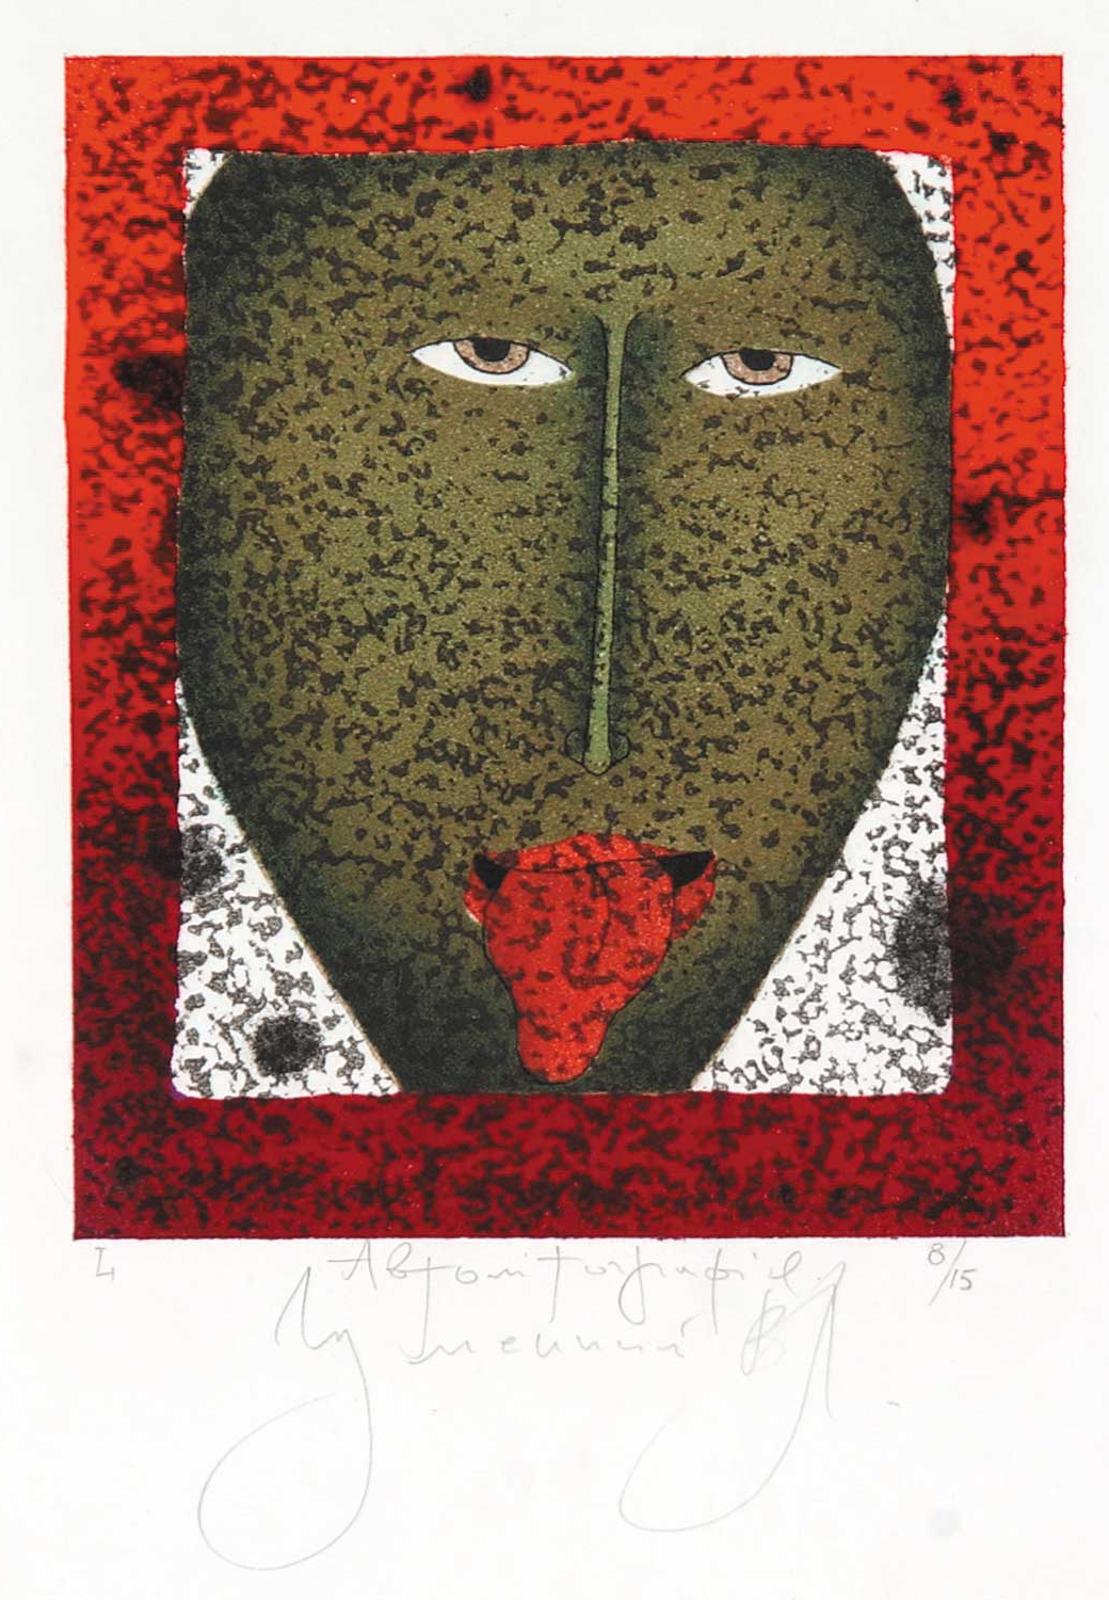 Vasyl Lopata (1941) - Self-Lithograph  #8/15